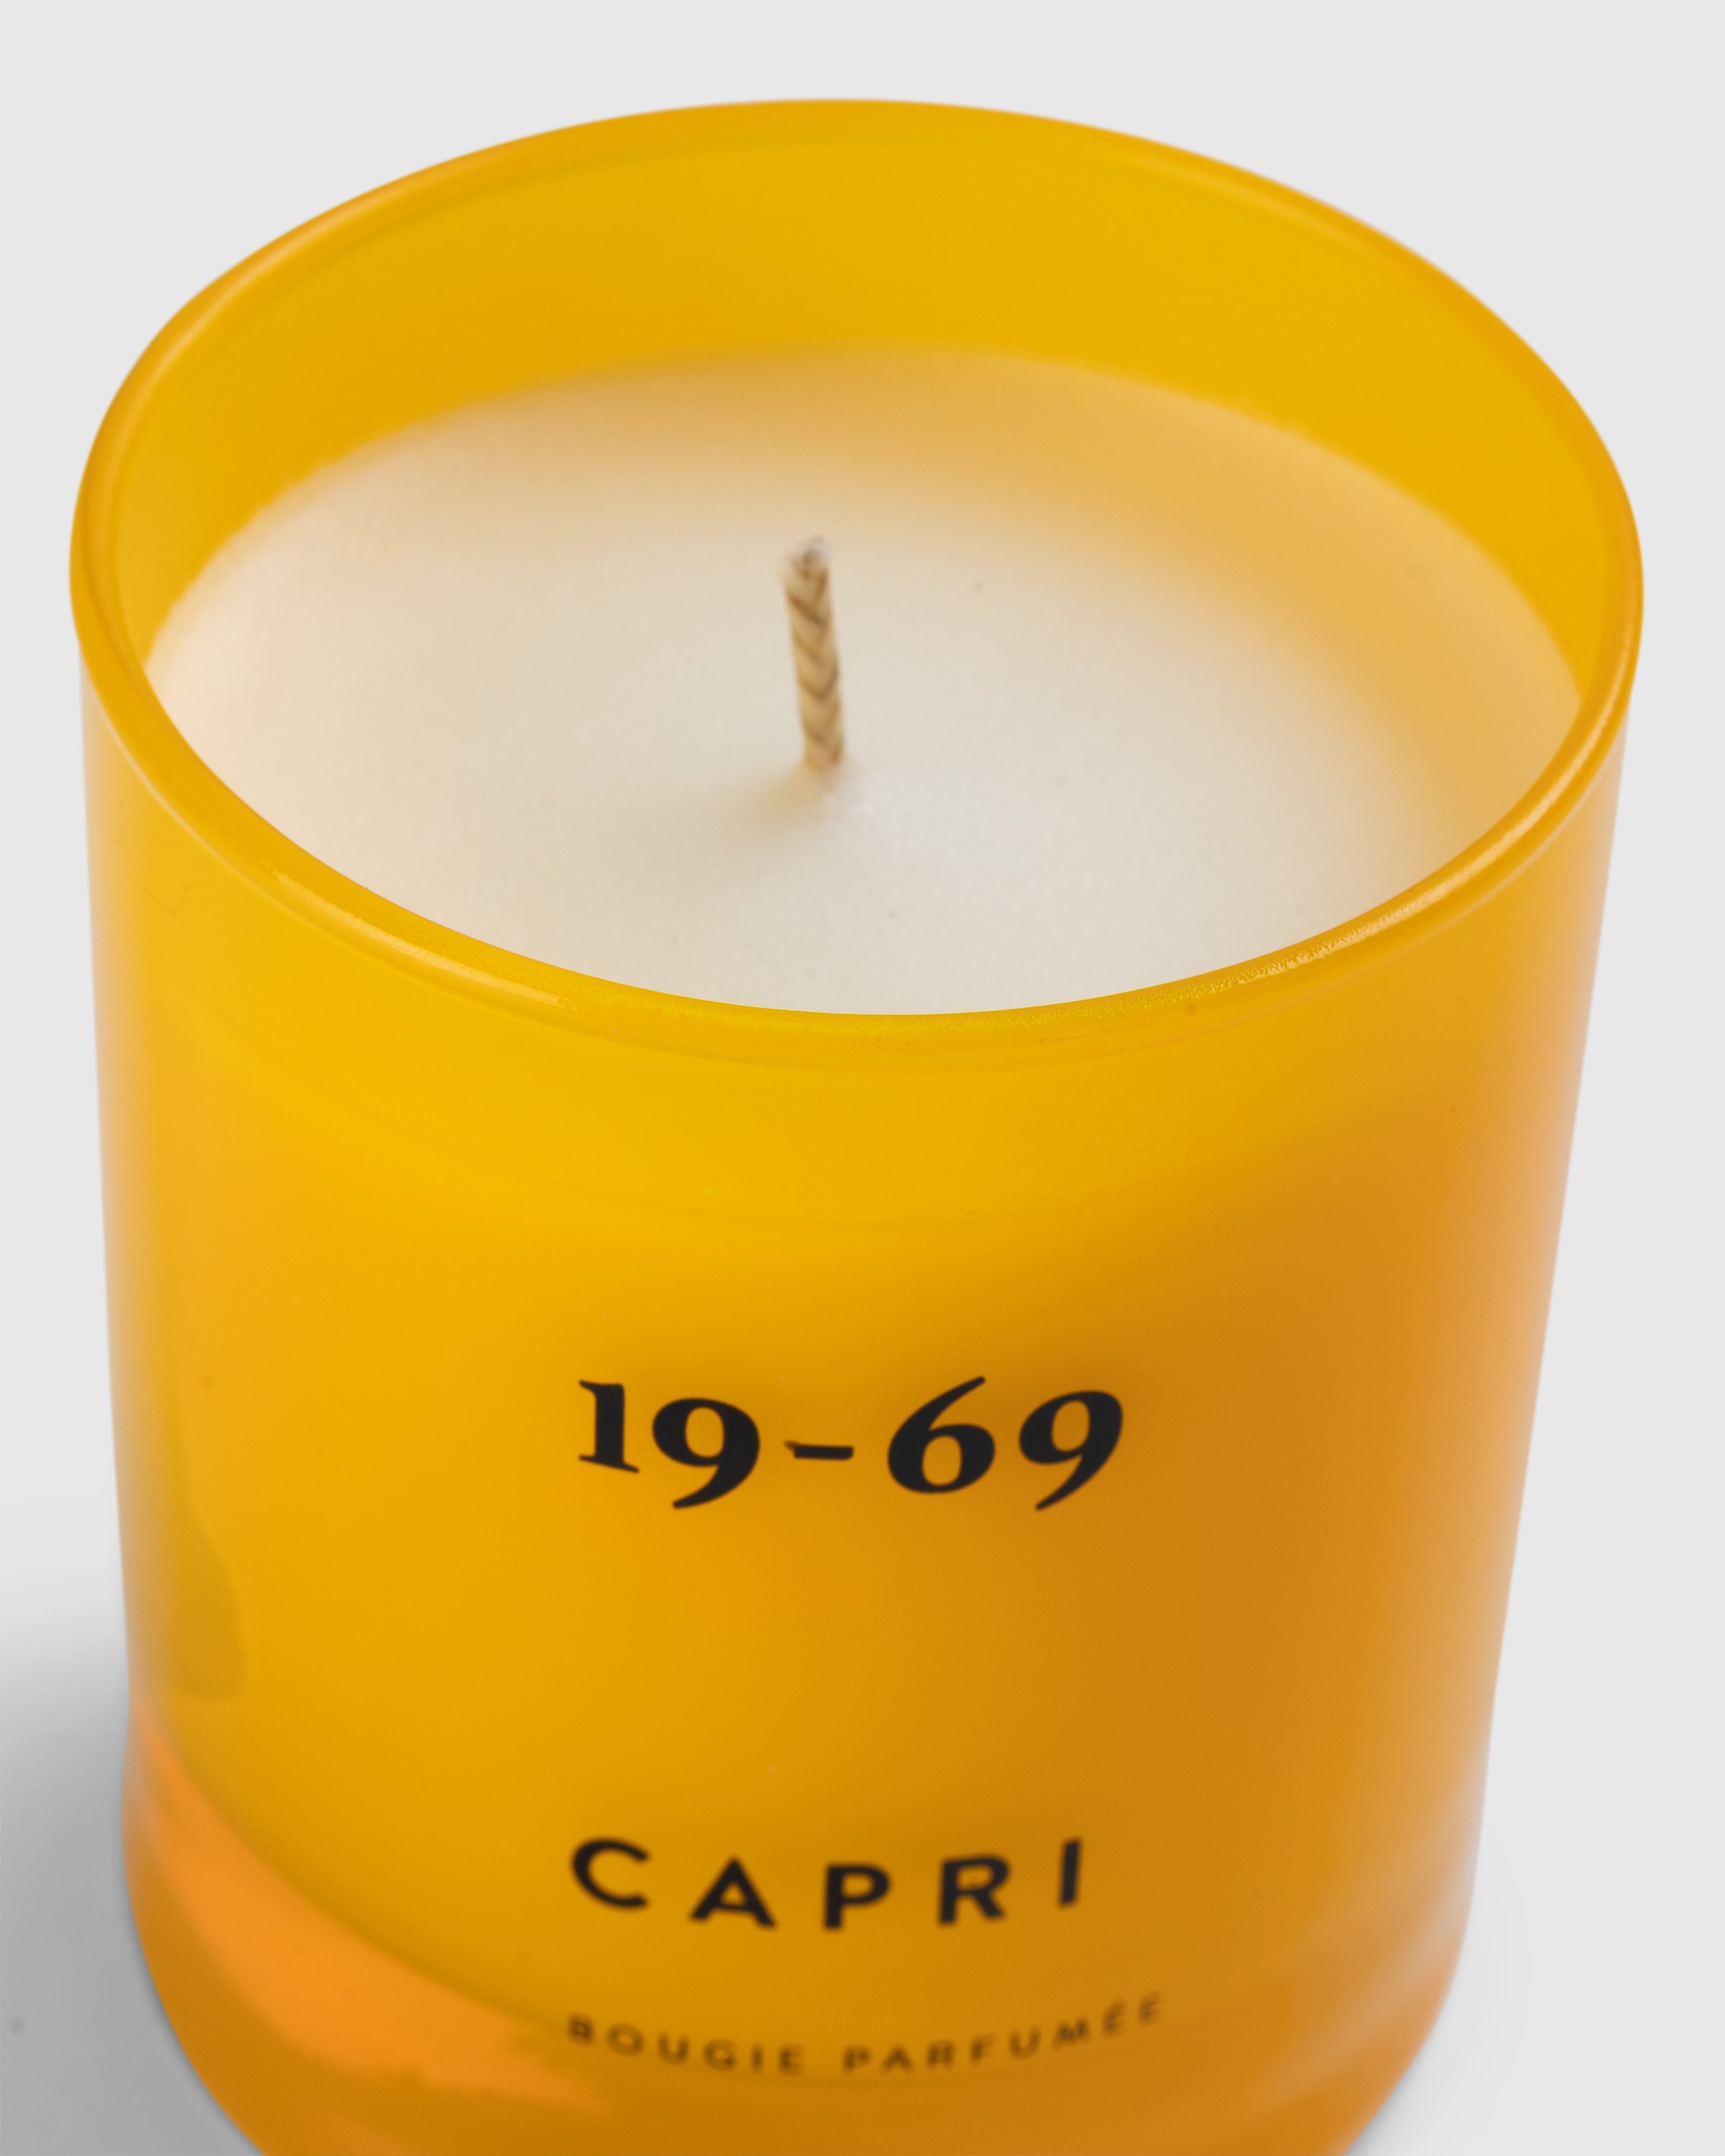 19-69 - Capri BP Candle - Lifestyle - Yellow - Image 3